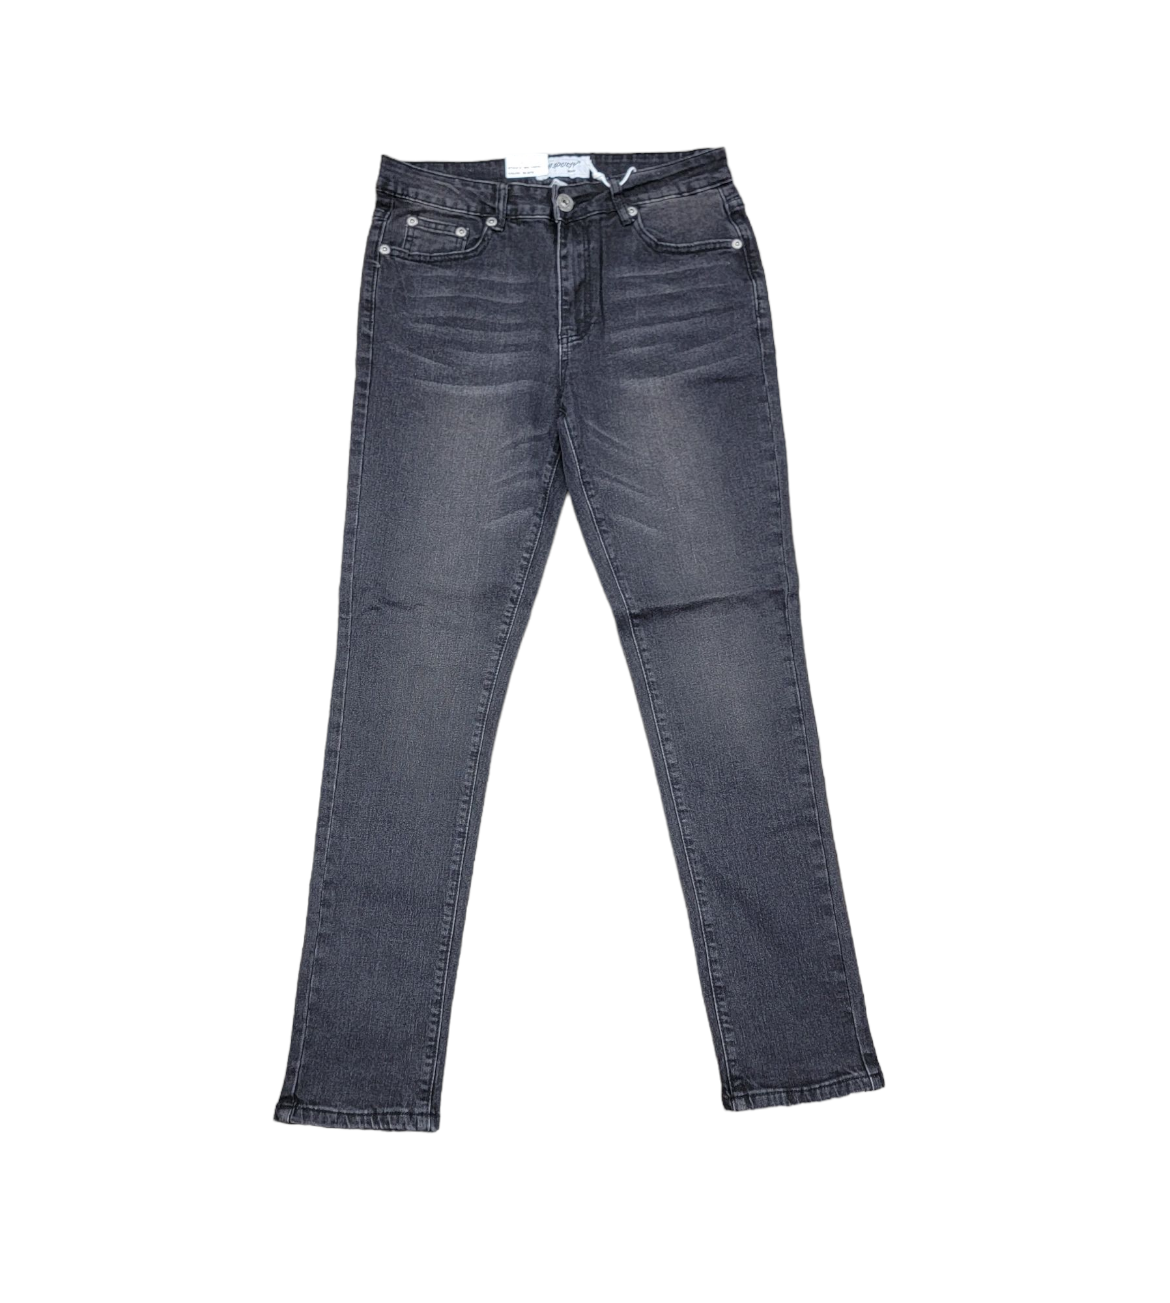 M Society Men's Super Stretchy Skinny Fit Jeans Black 13075